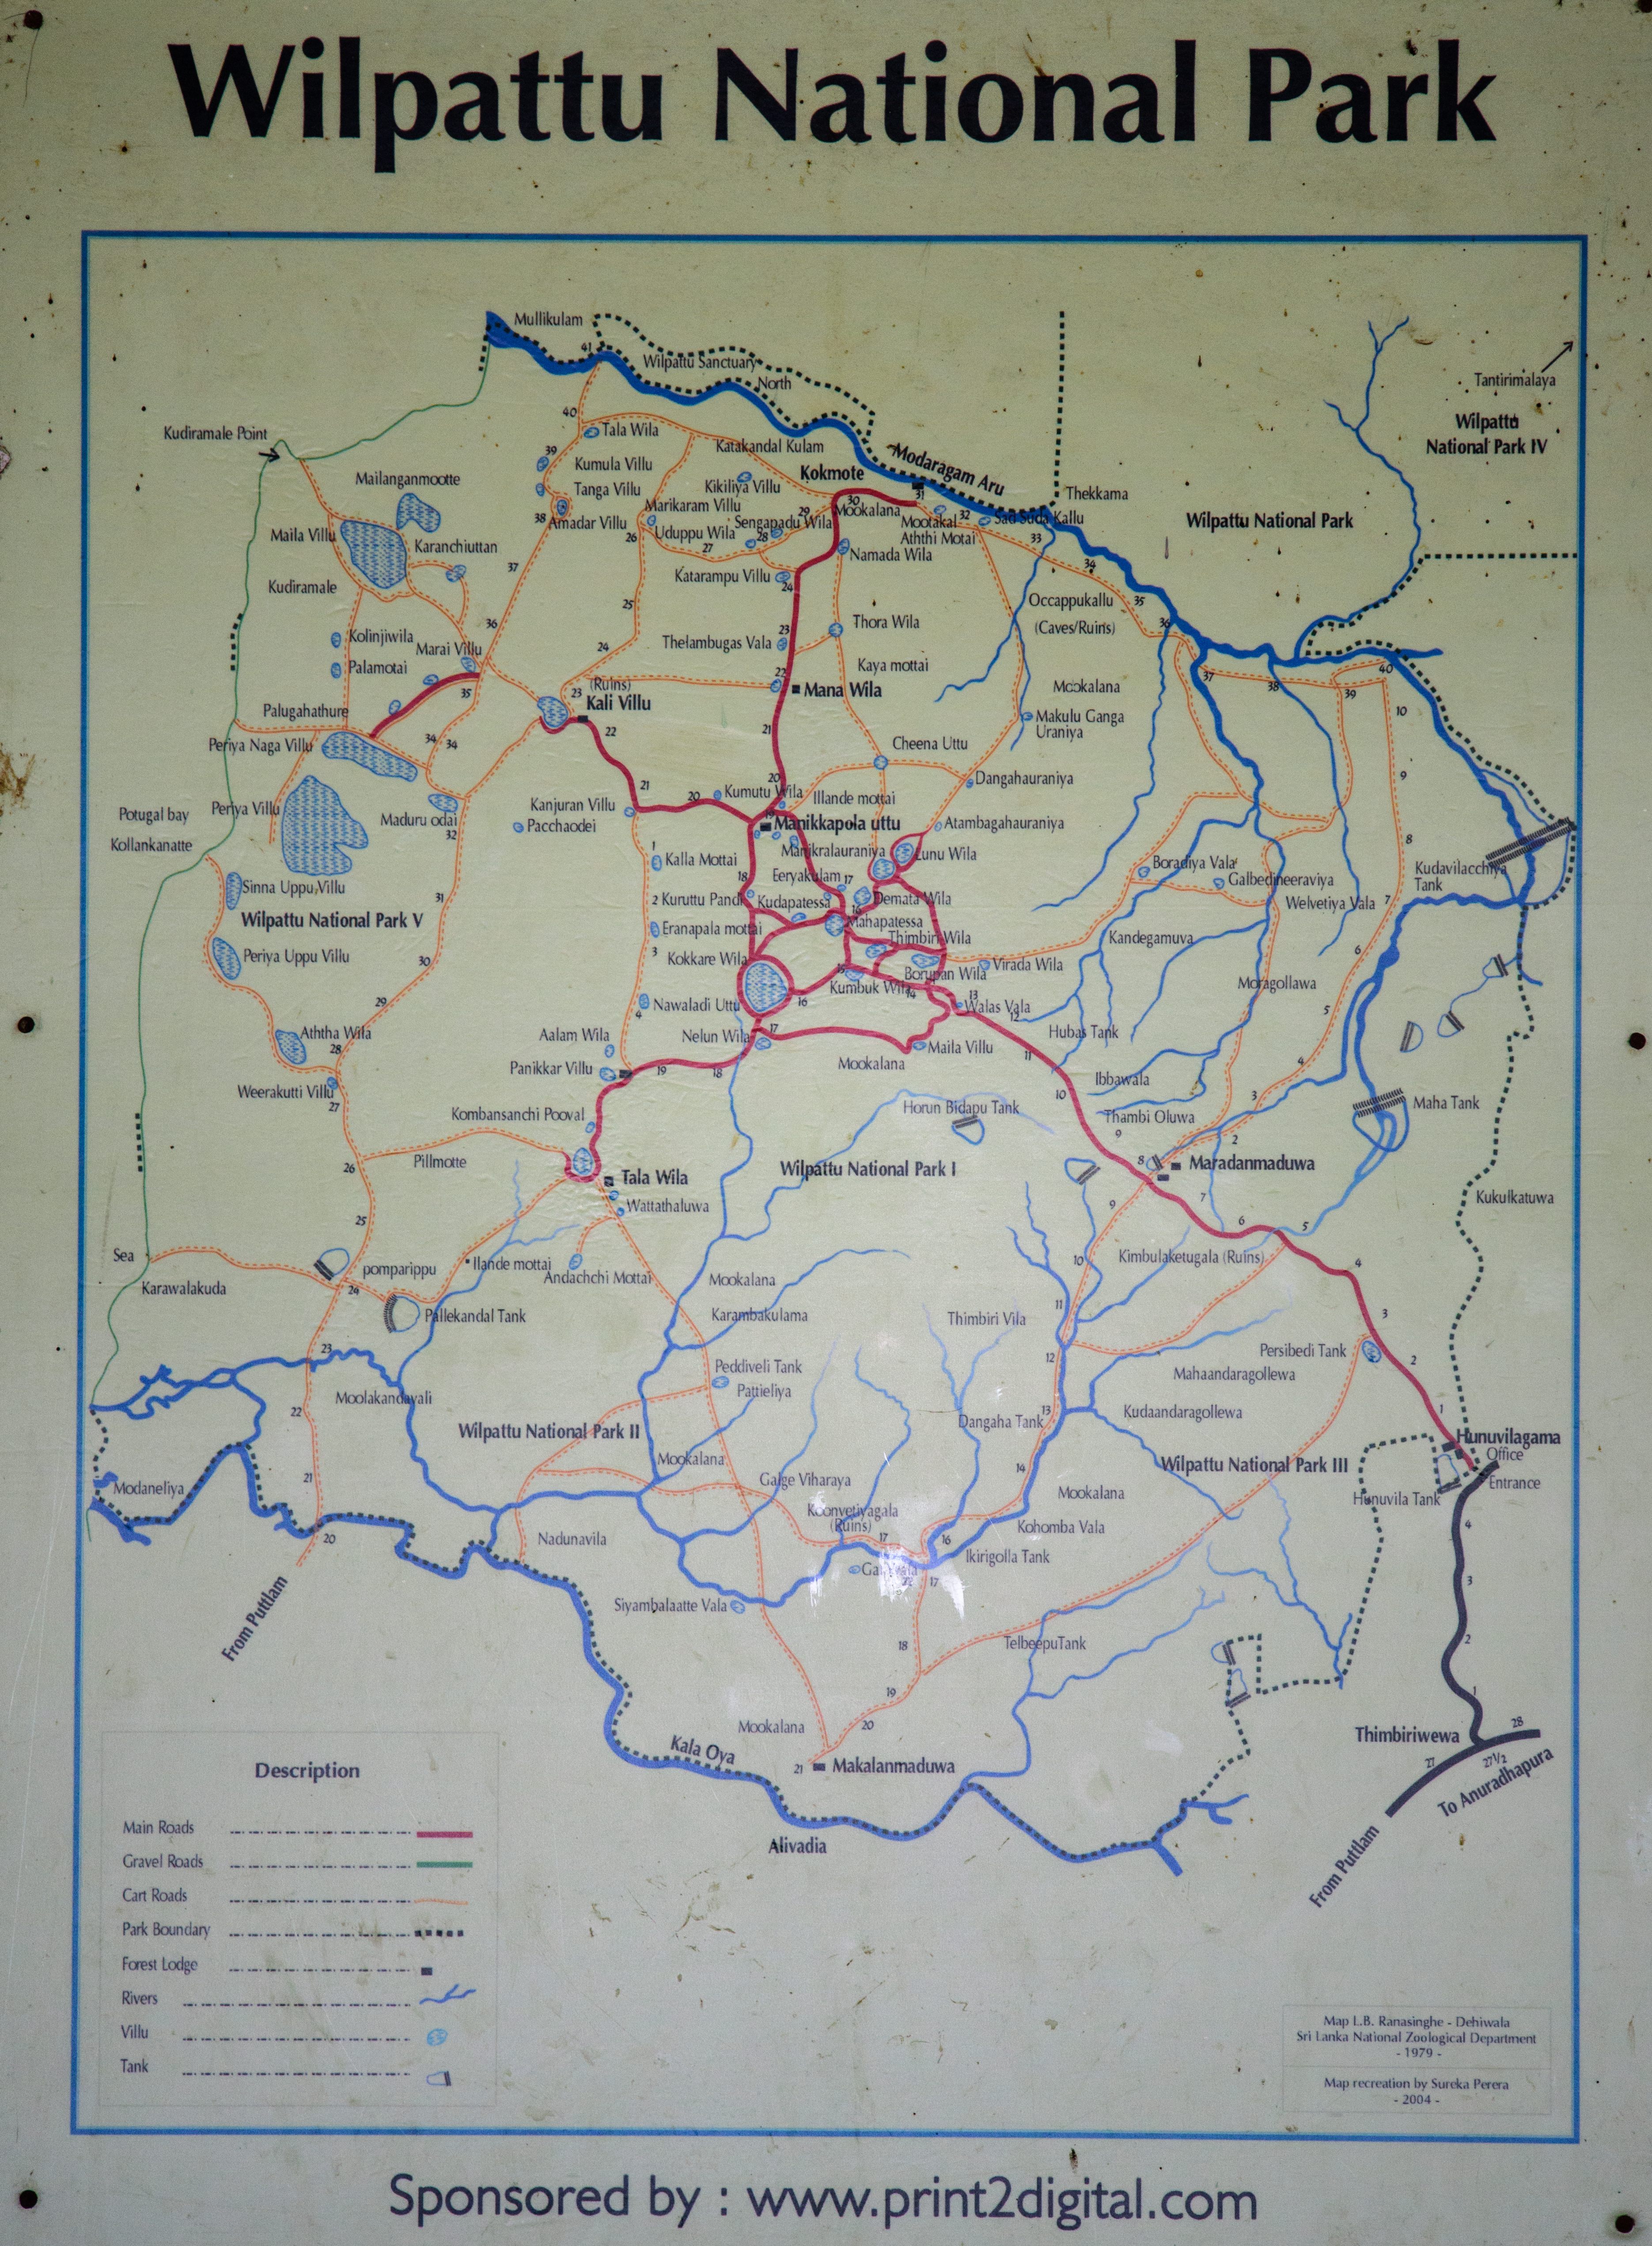 Wilpattu National Park wikimedia.org/wikipedia Map